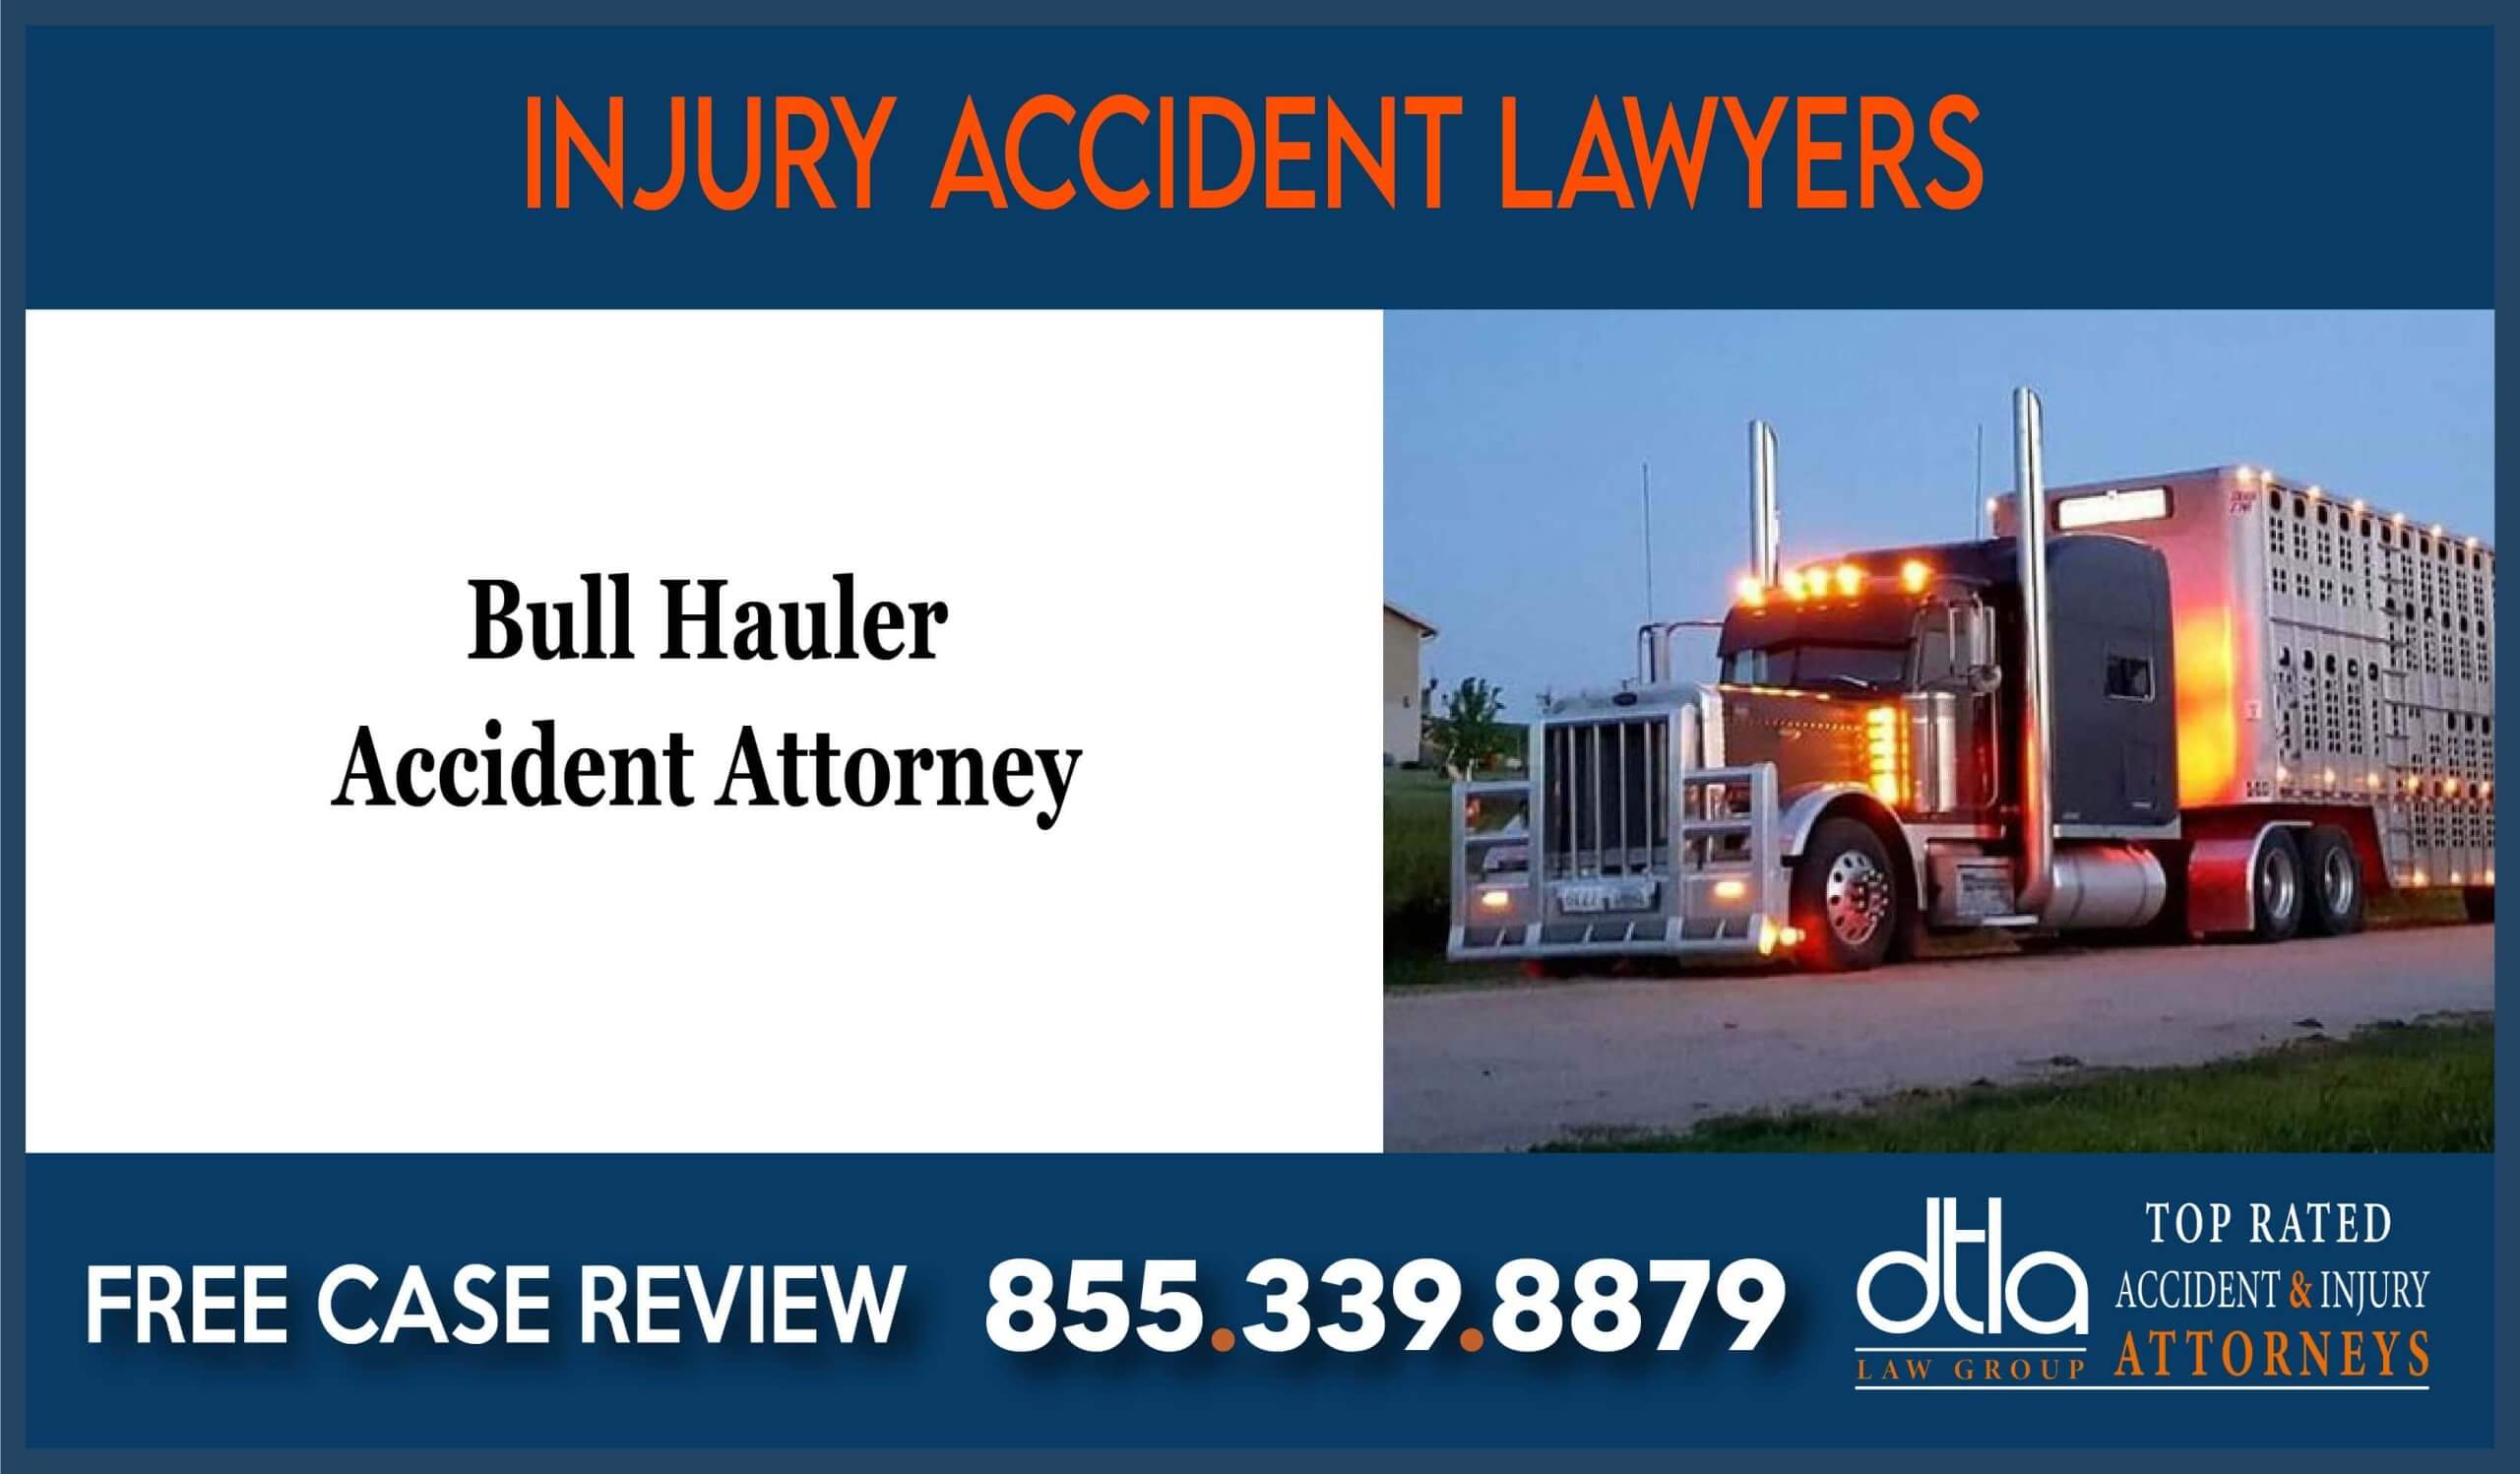 Bull Hauler Accident Attorney incident liability lawsuit attorney sue